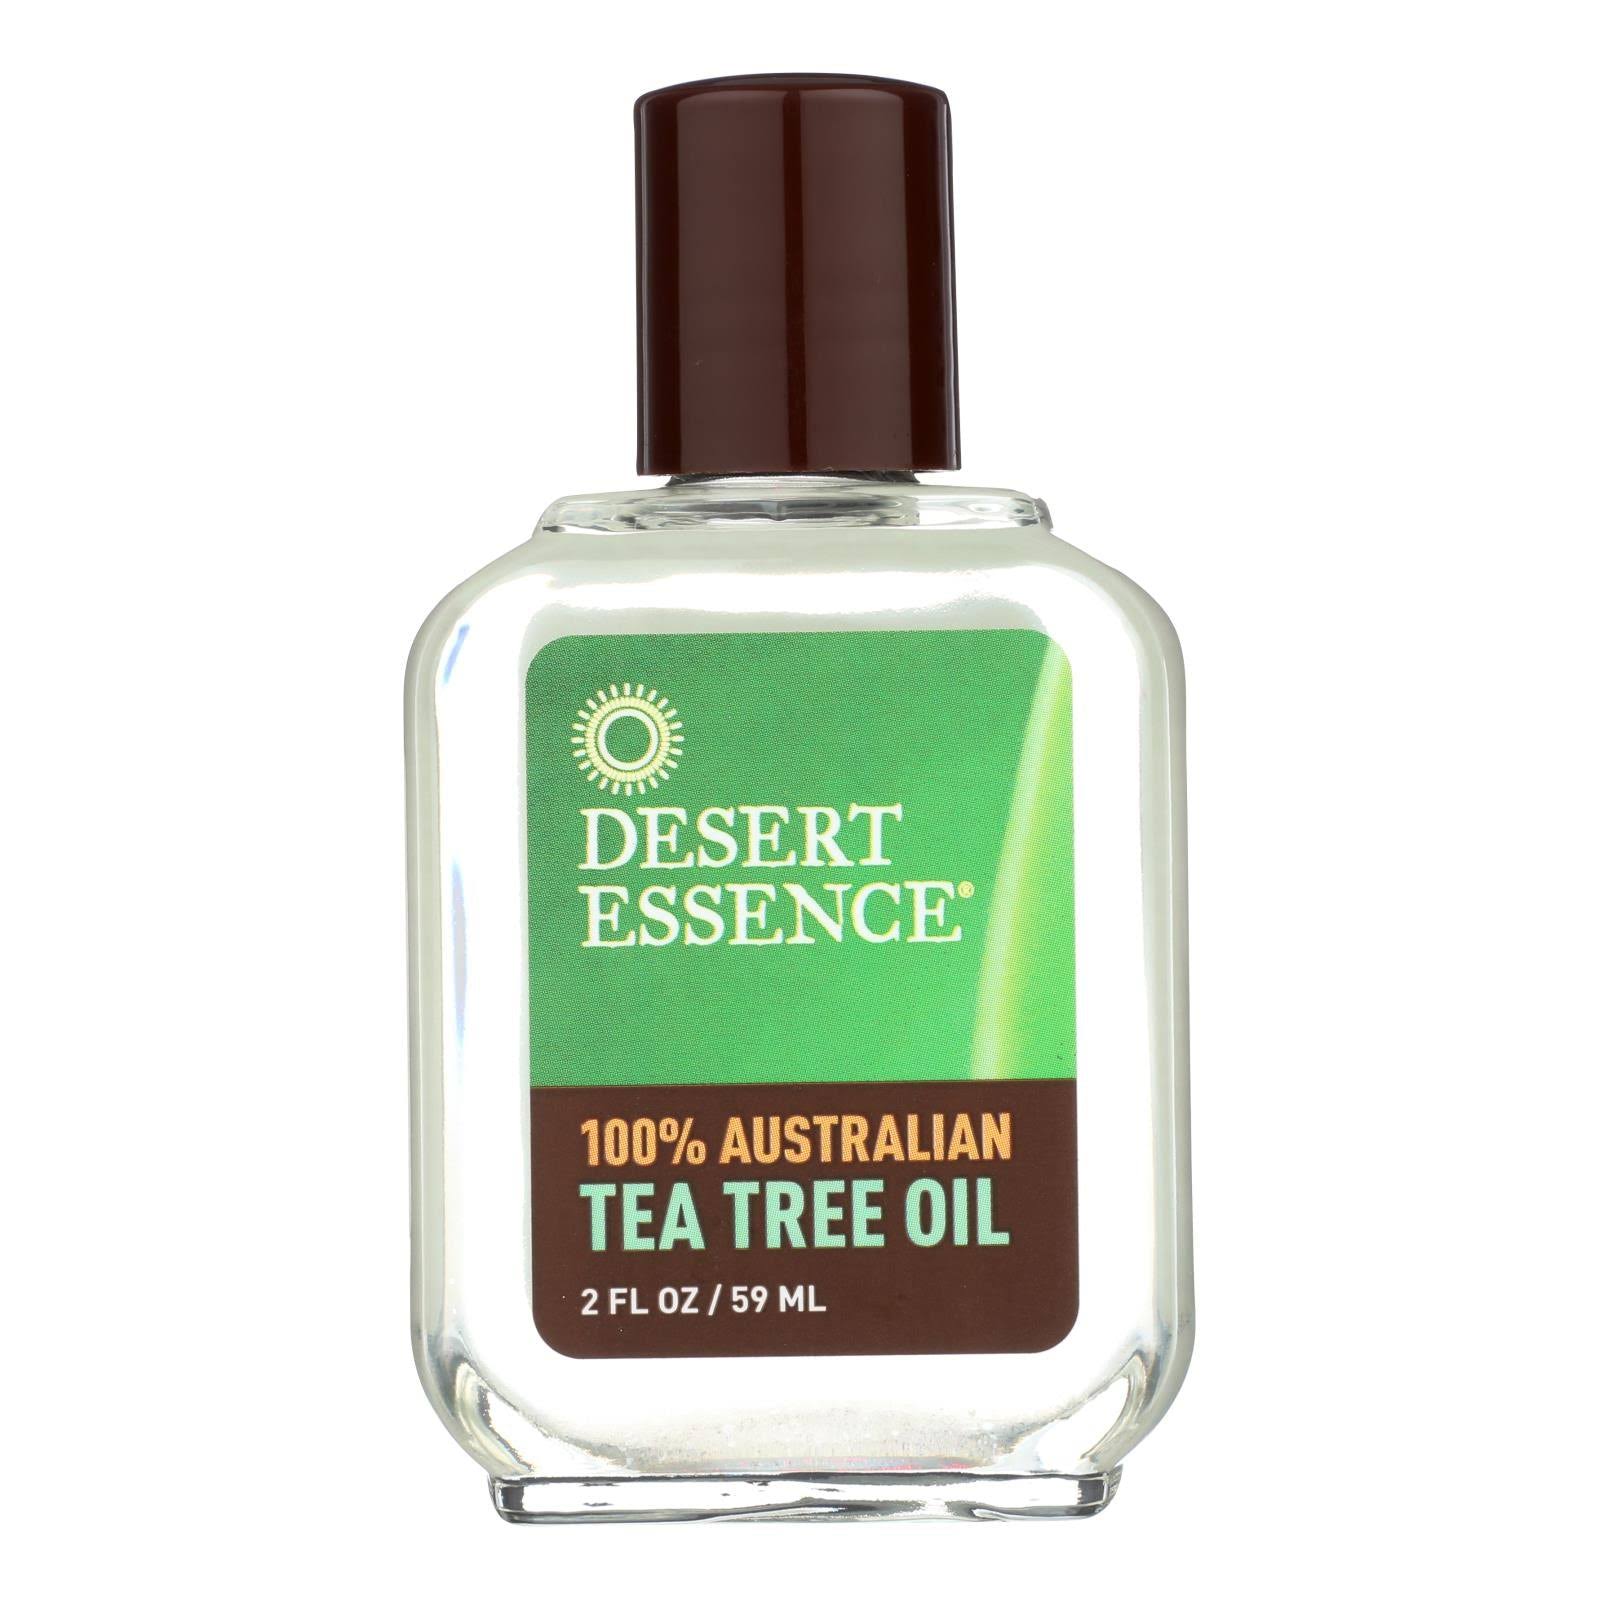 Desert Essence 100% Pure Austrailian Tea Tree Oil - 2 fl oz